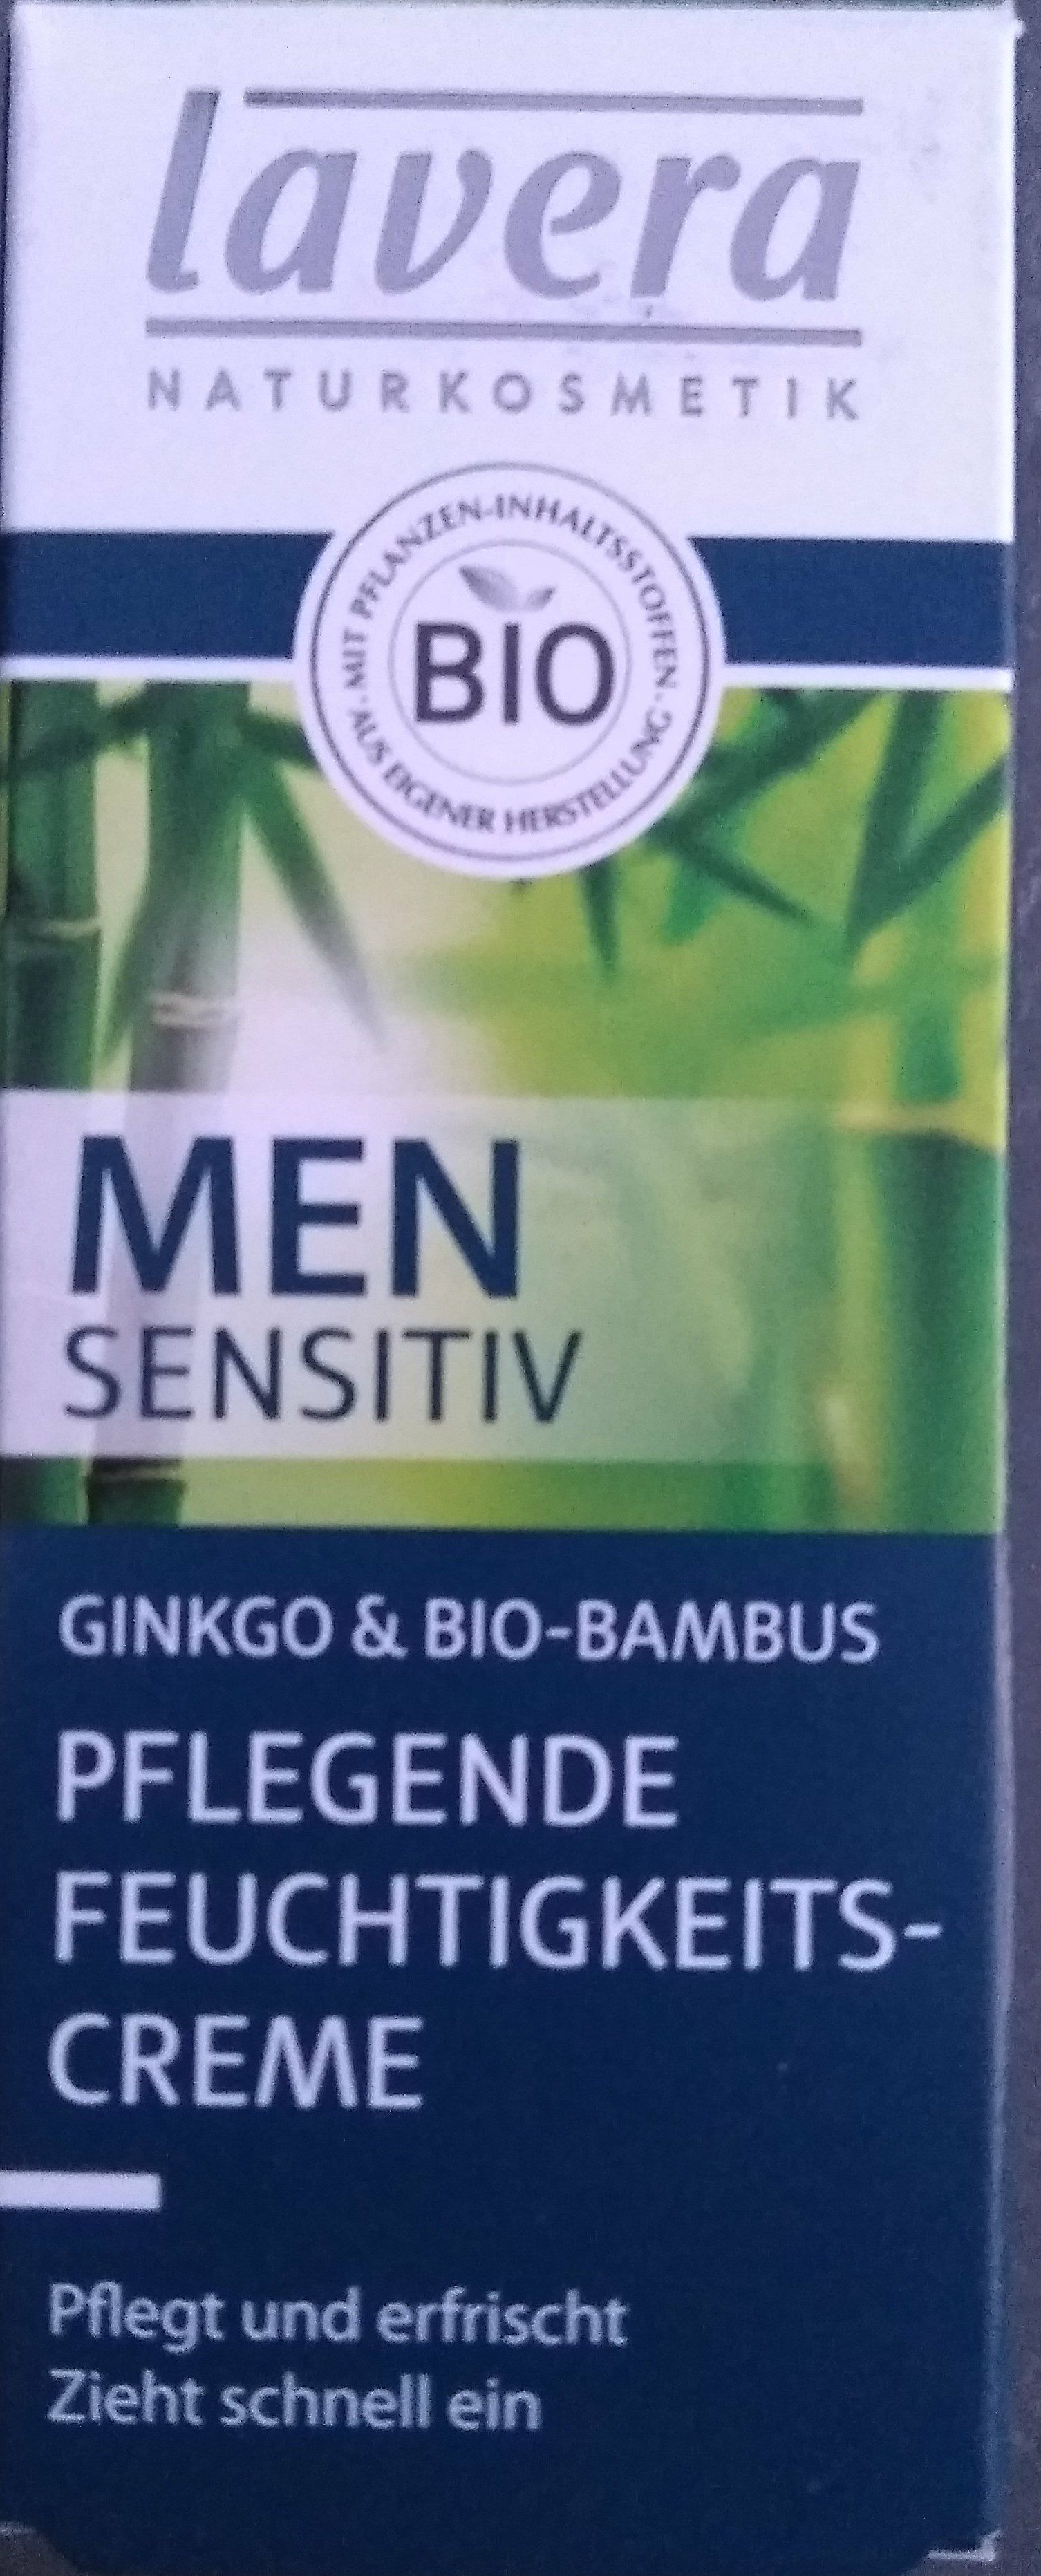 Men Sensitiv Pflegende Feuchtigkeitscreme - Product - de